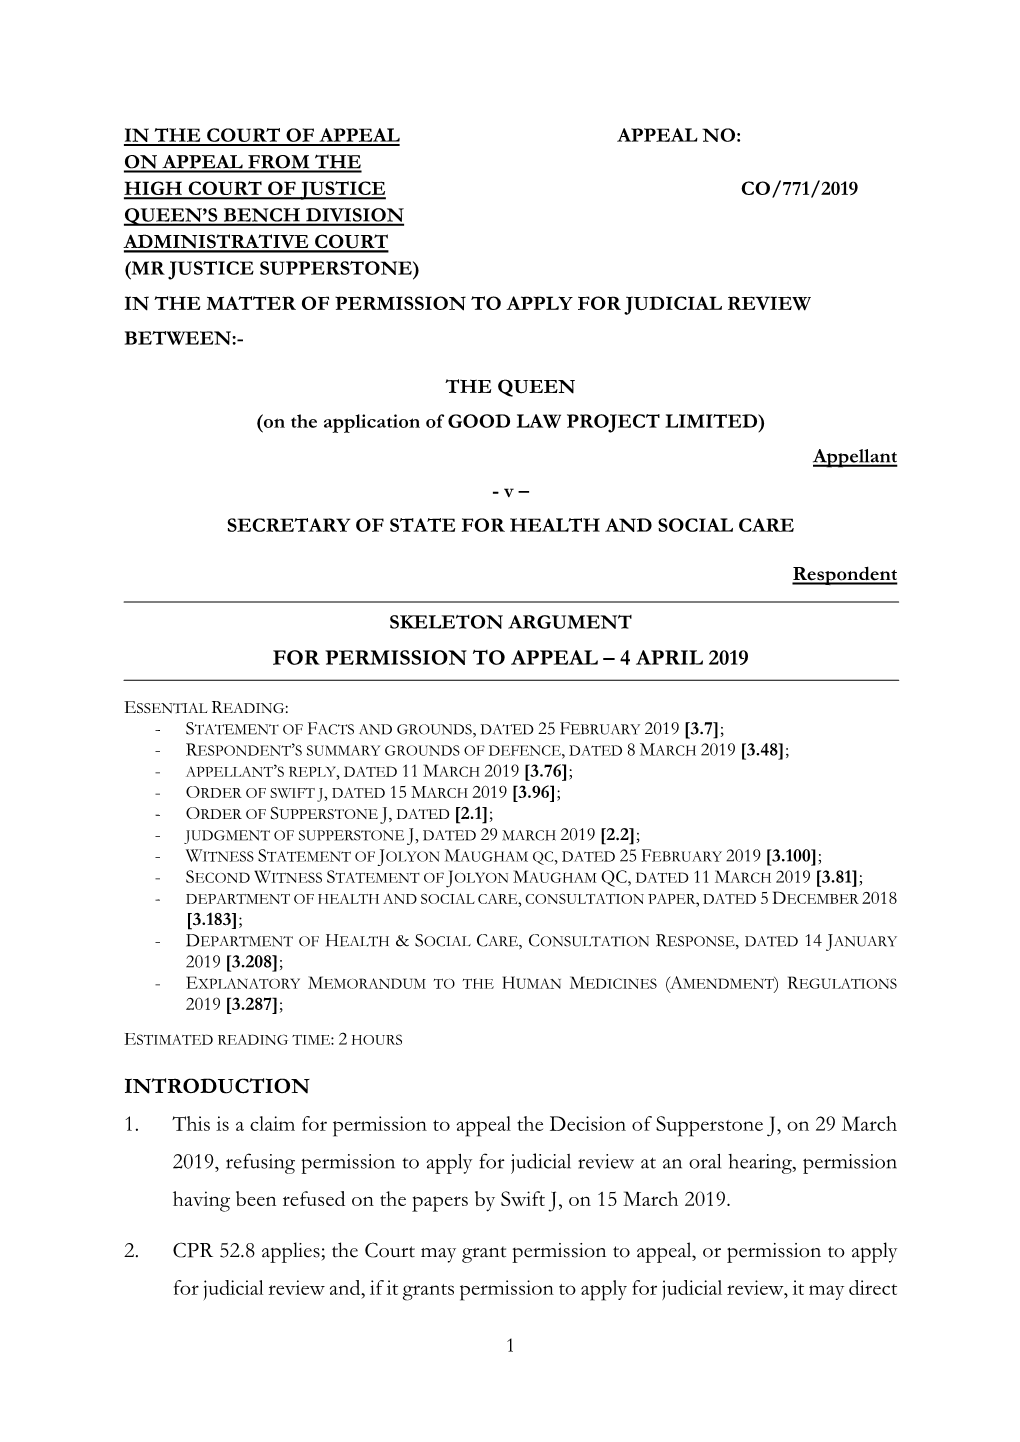 Skeleton Argument for Permission to Appeal – 4 April 2019